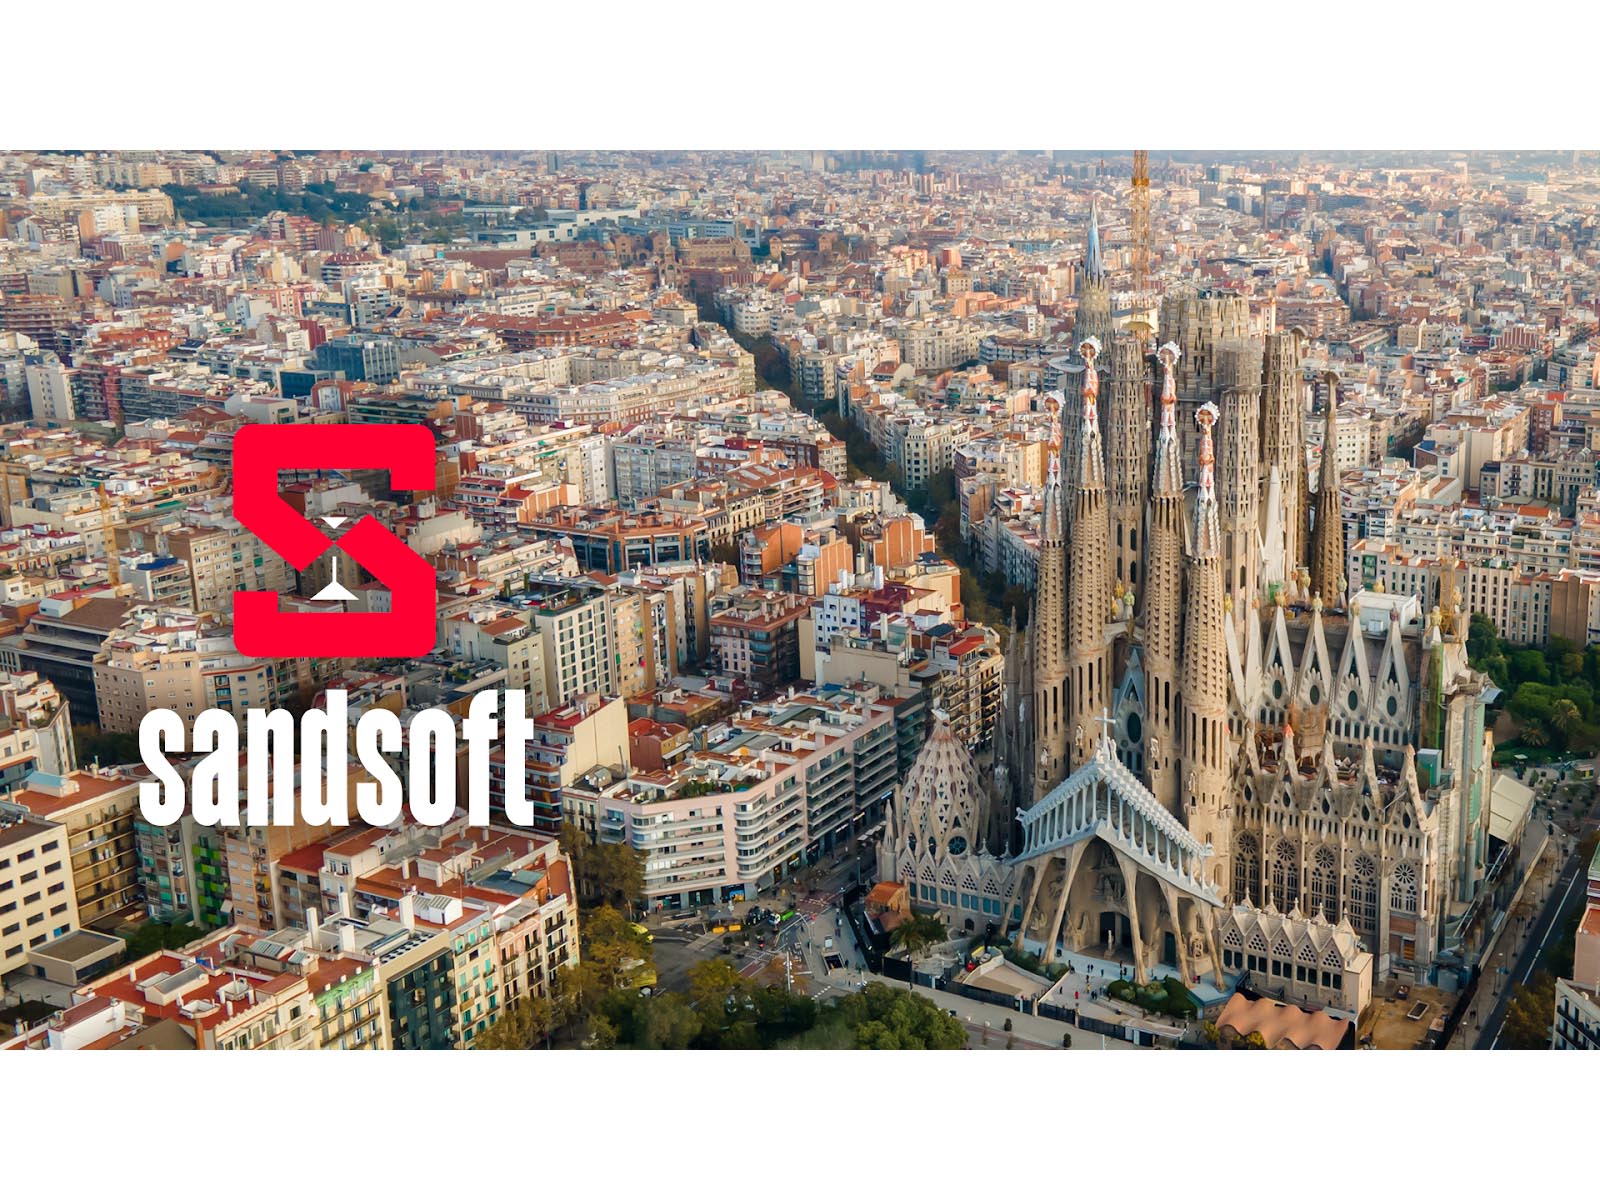 Riyadh headquartered Sandsoft launches Barcelona game development studio